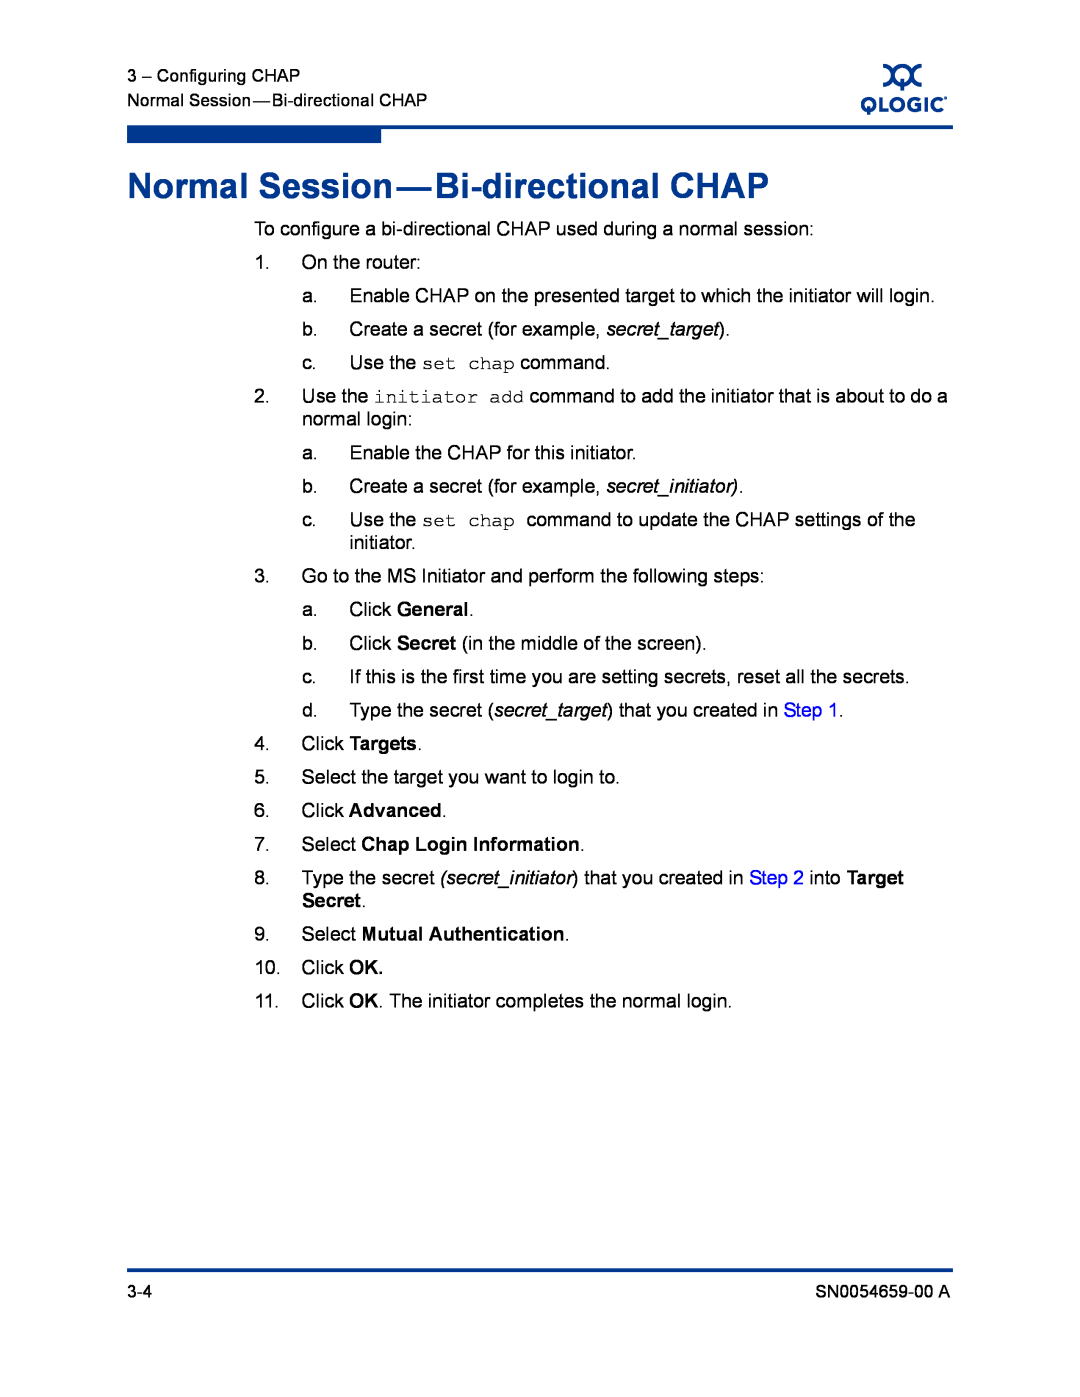 Q-Logic ISR6142 manual Normal Session-Bi-directional CHAP, Click Advanced 7. Select Chap Login Information 